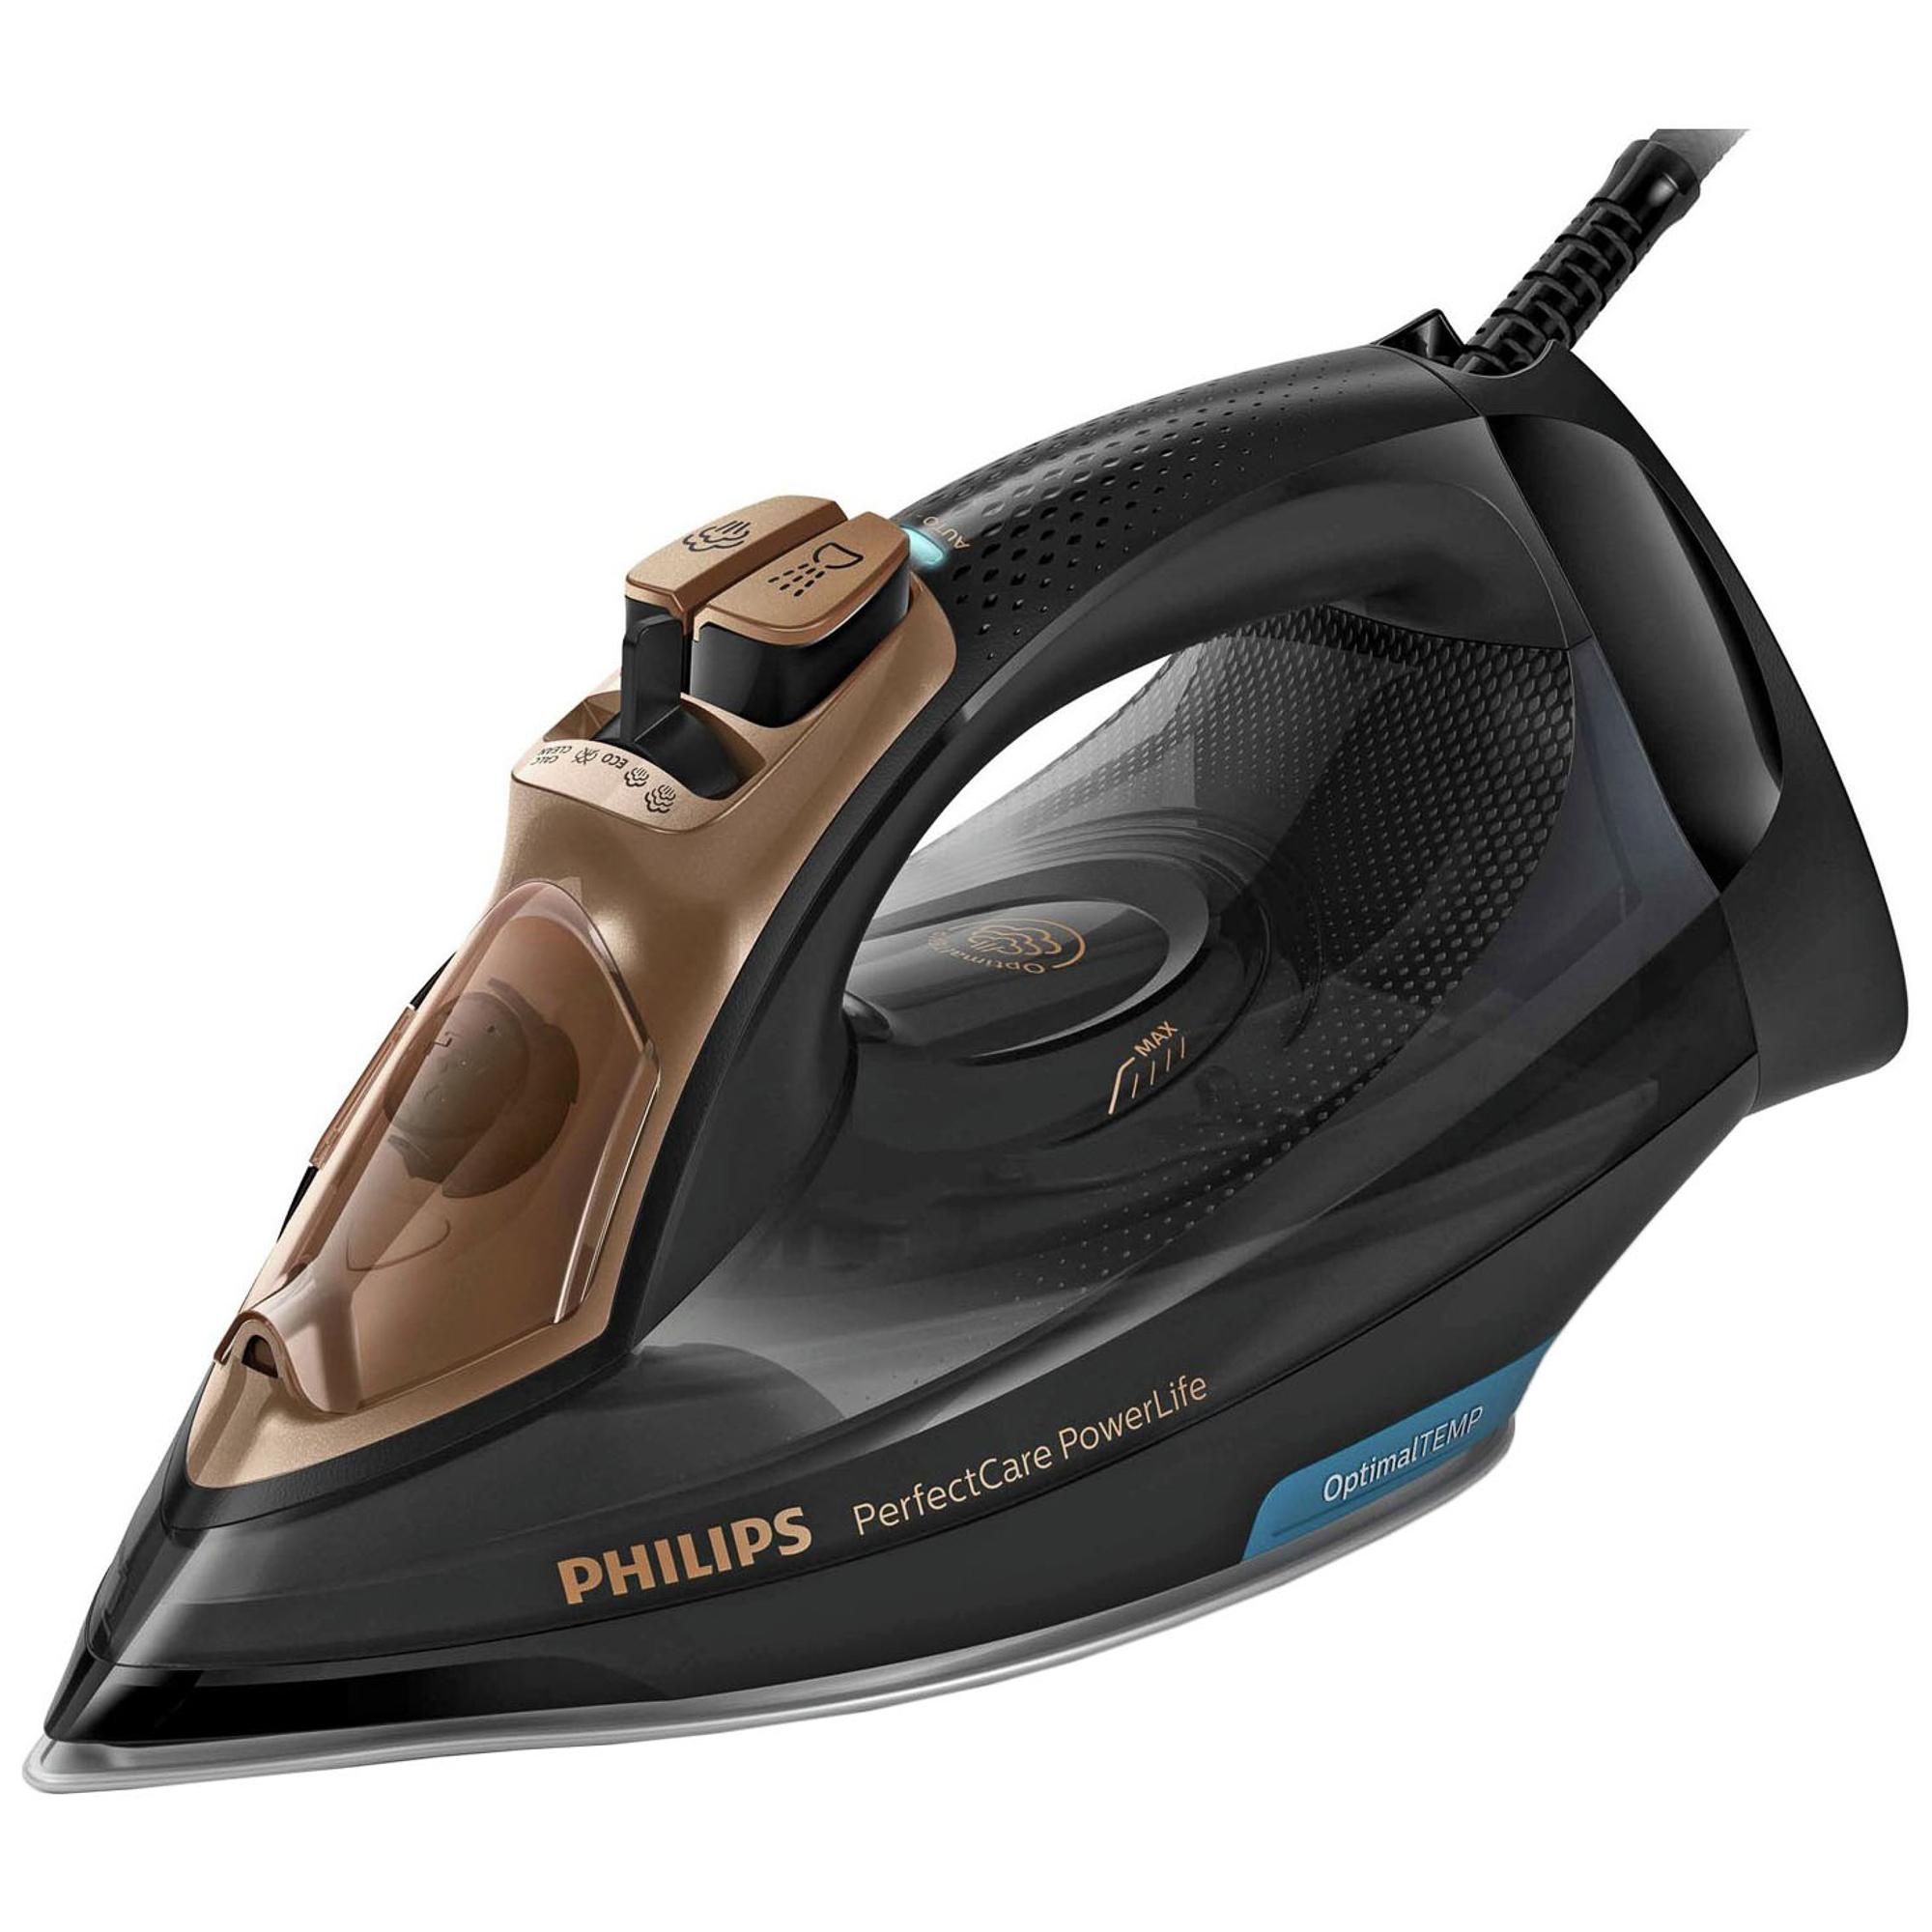 Филипс цена отзывы. Утюг Philips gc3929/64. Утюг Philips PERFECTCARE. Утюг Philips PERFECTCARE POWERLIFE. Утюг Philips PERFECTCARE POWERLIFE 2400.